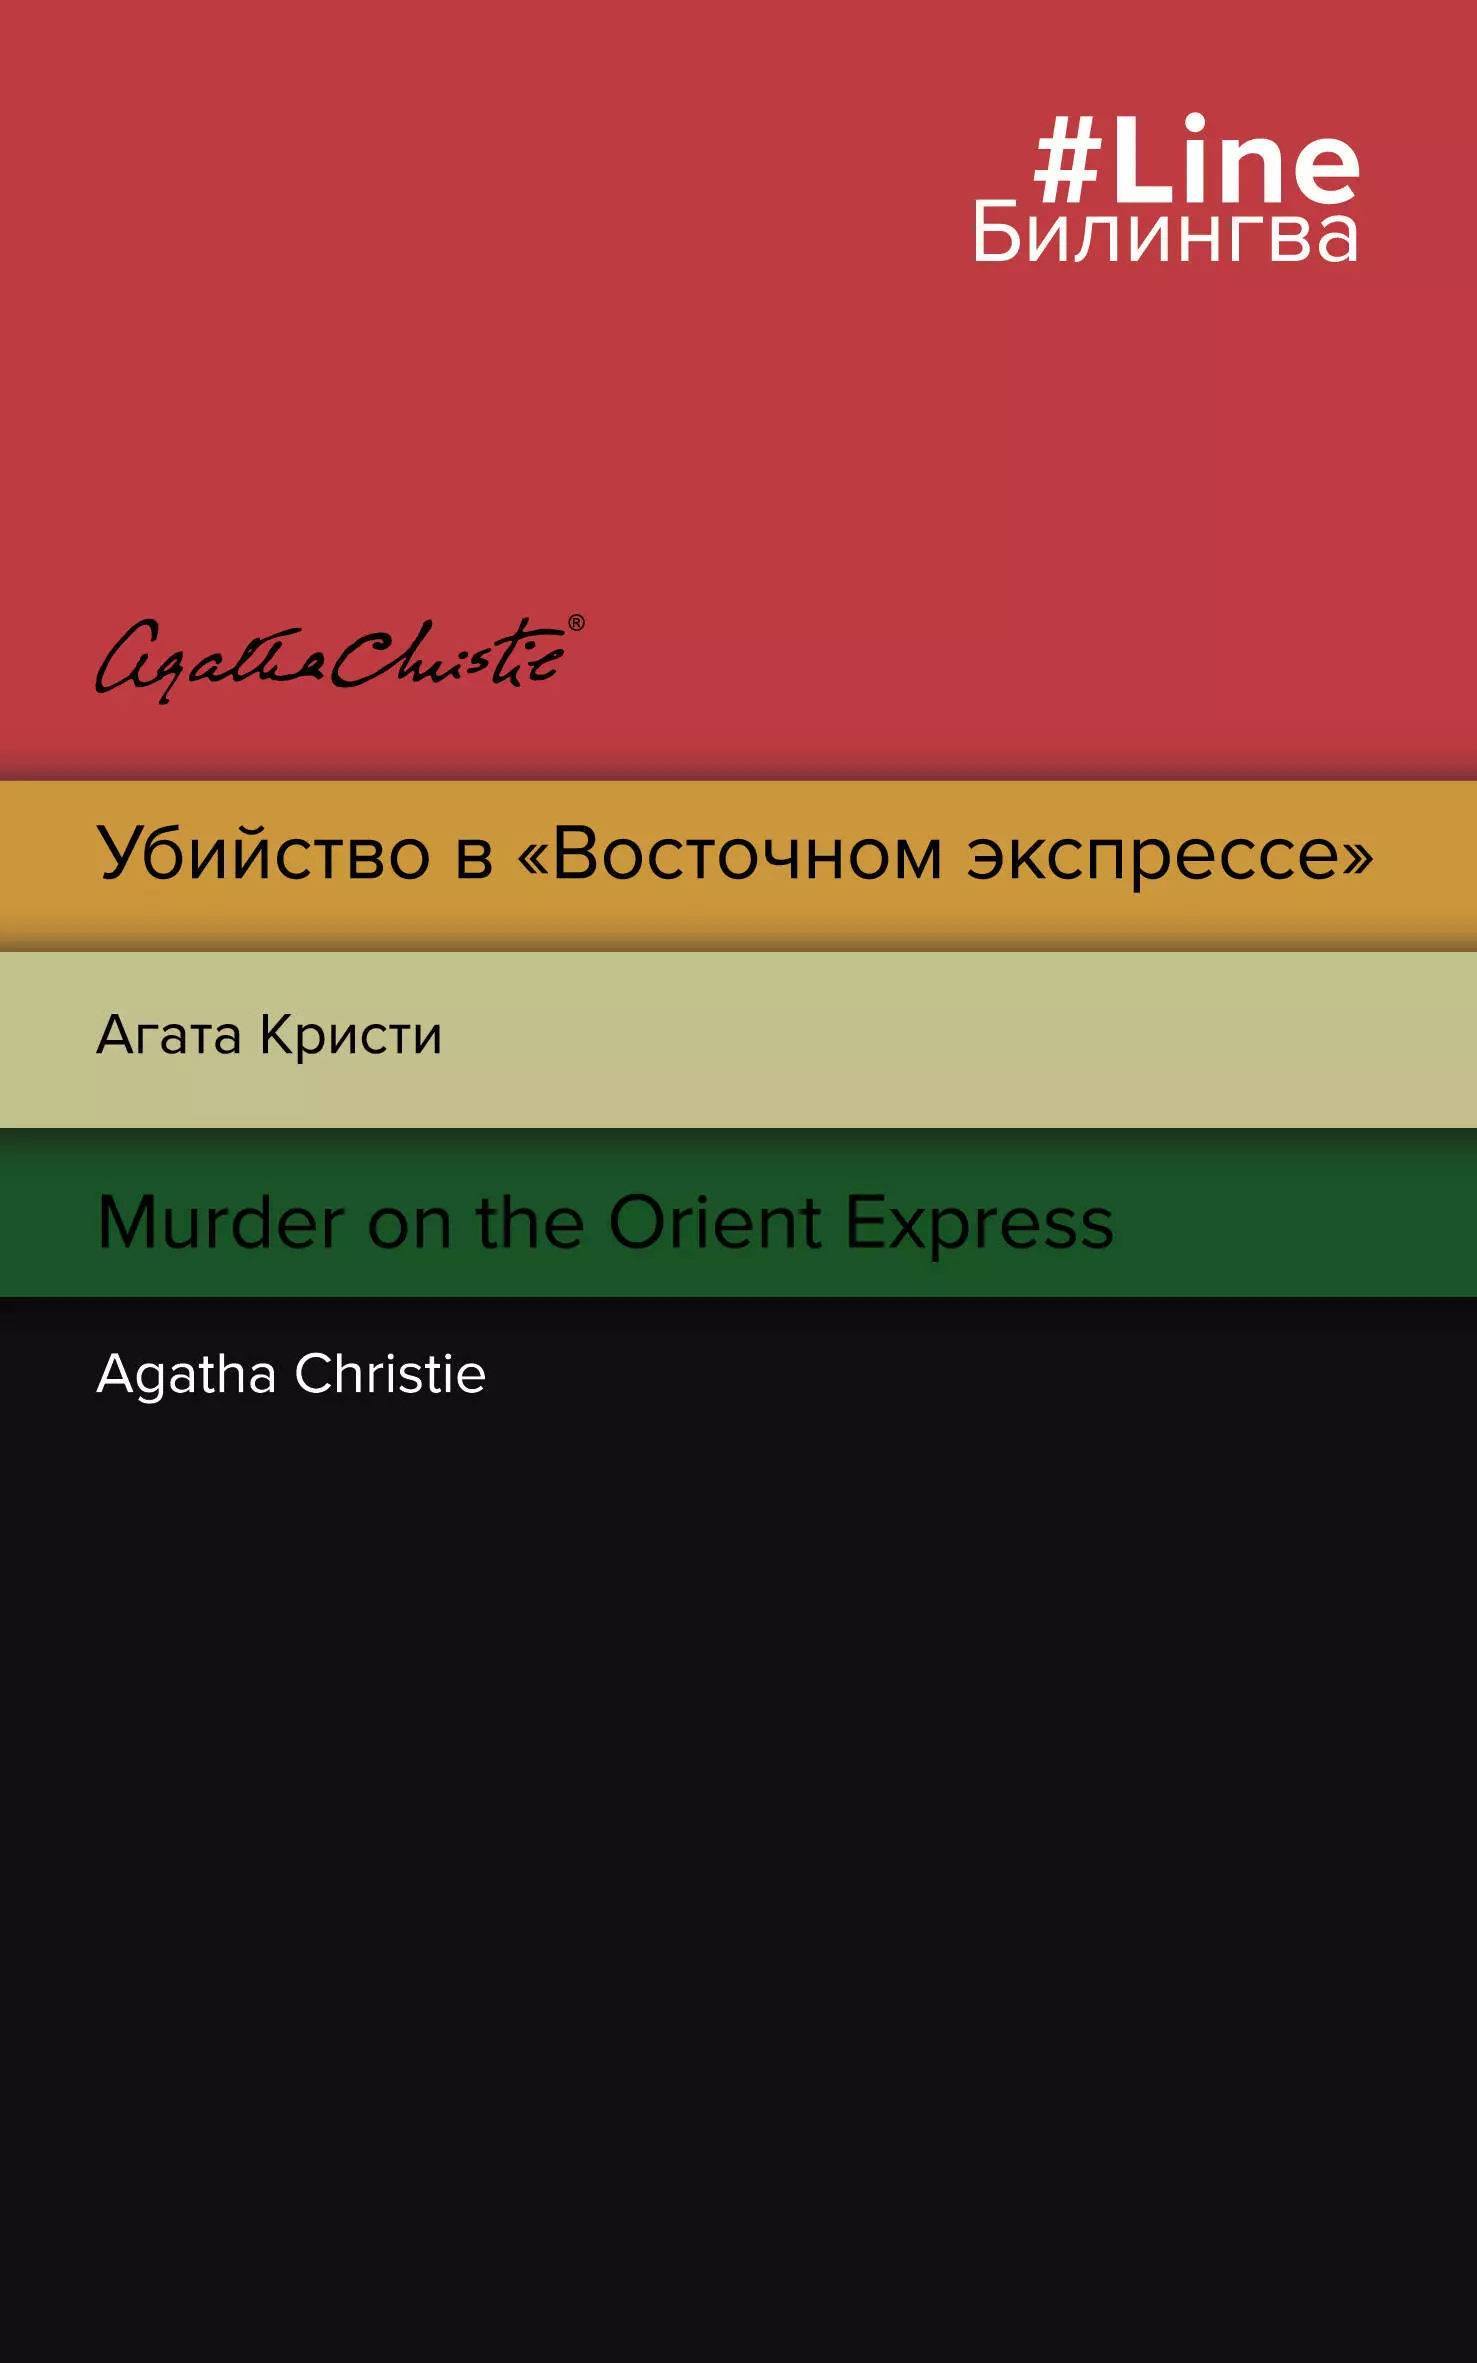 christie a murder on the orient express убийство в восточном экспрессе Кристи Агата Убийство в Восточном экспрессе / Murder on the Orient Express